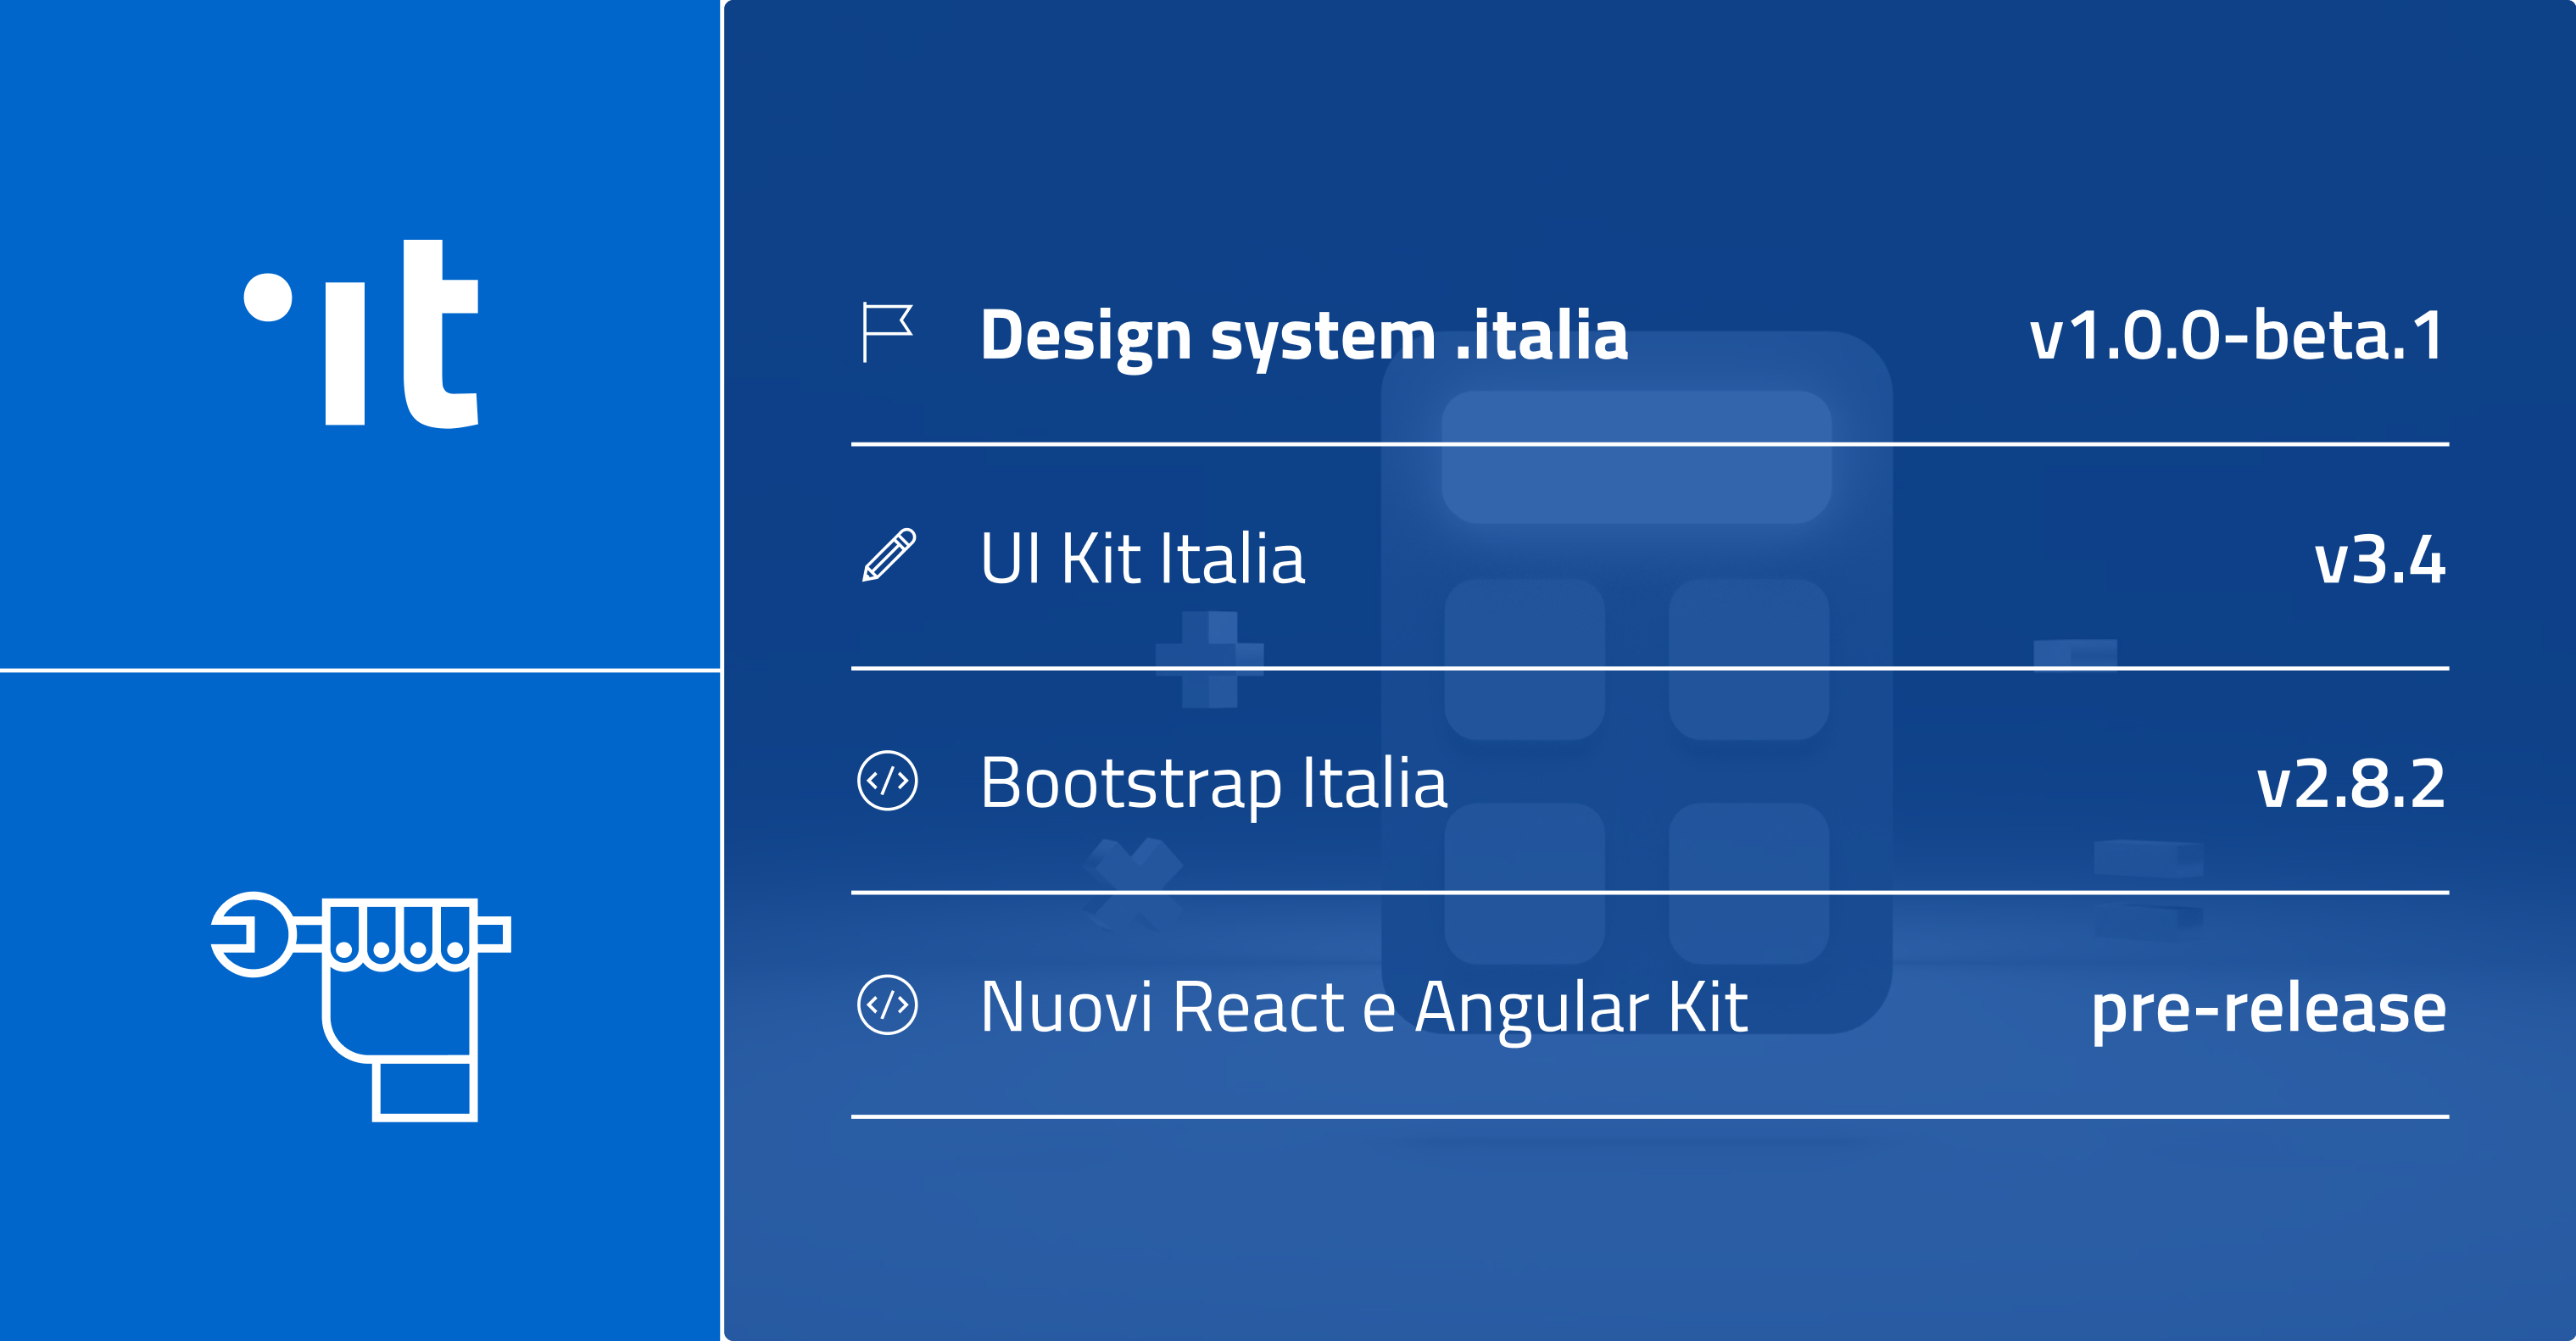 Ultimi rilasci: Design system .italia v1-beta.1; UI Kit Italia v3.4.0; Bootstrap Italia 2.8.2; React e Angular Kit pre-releases